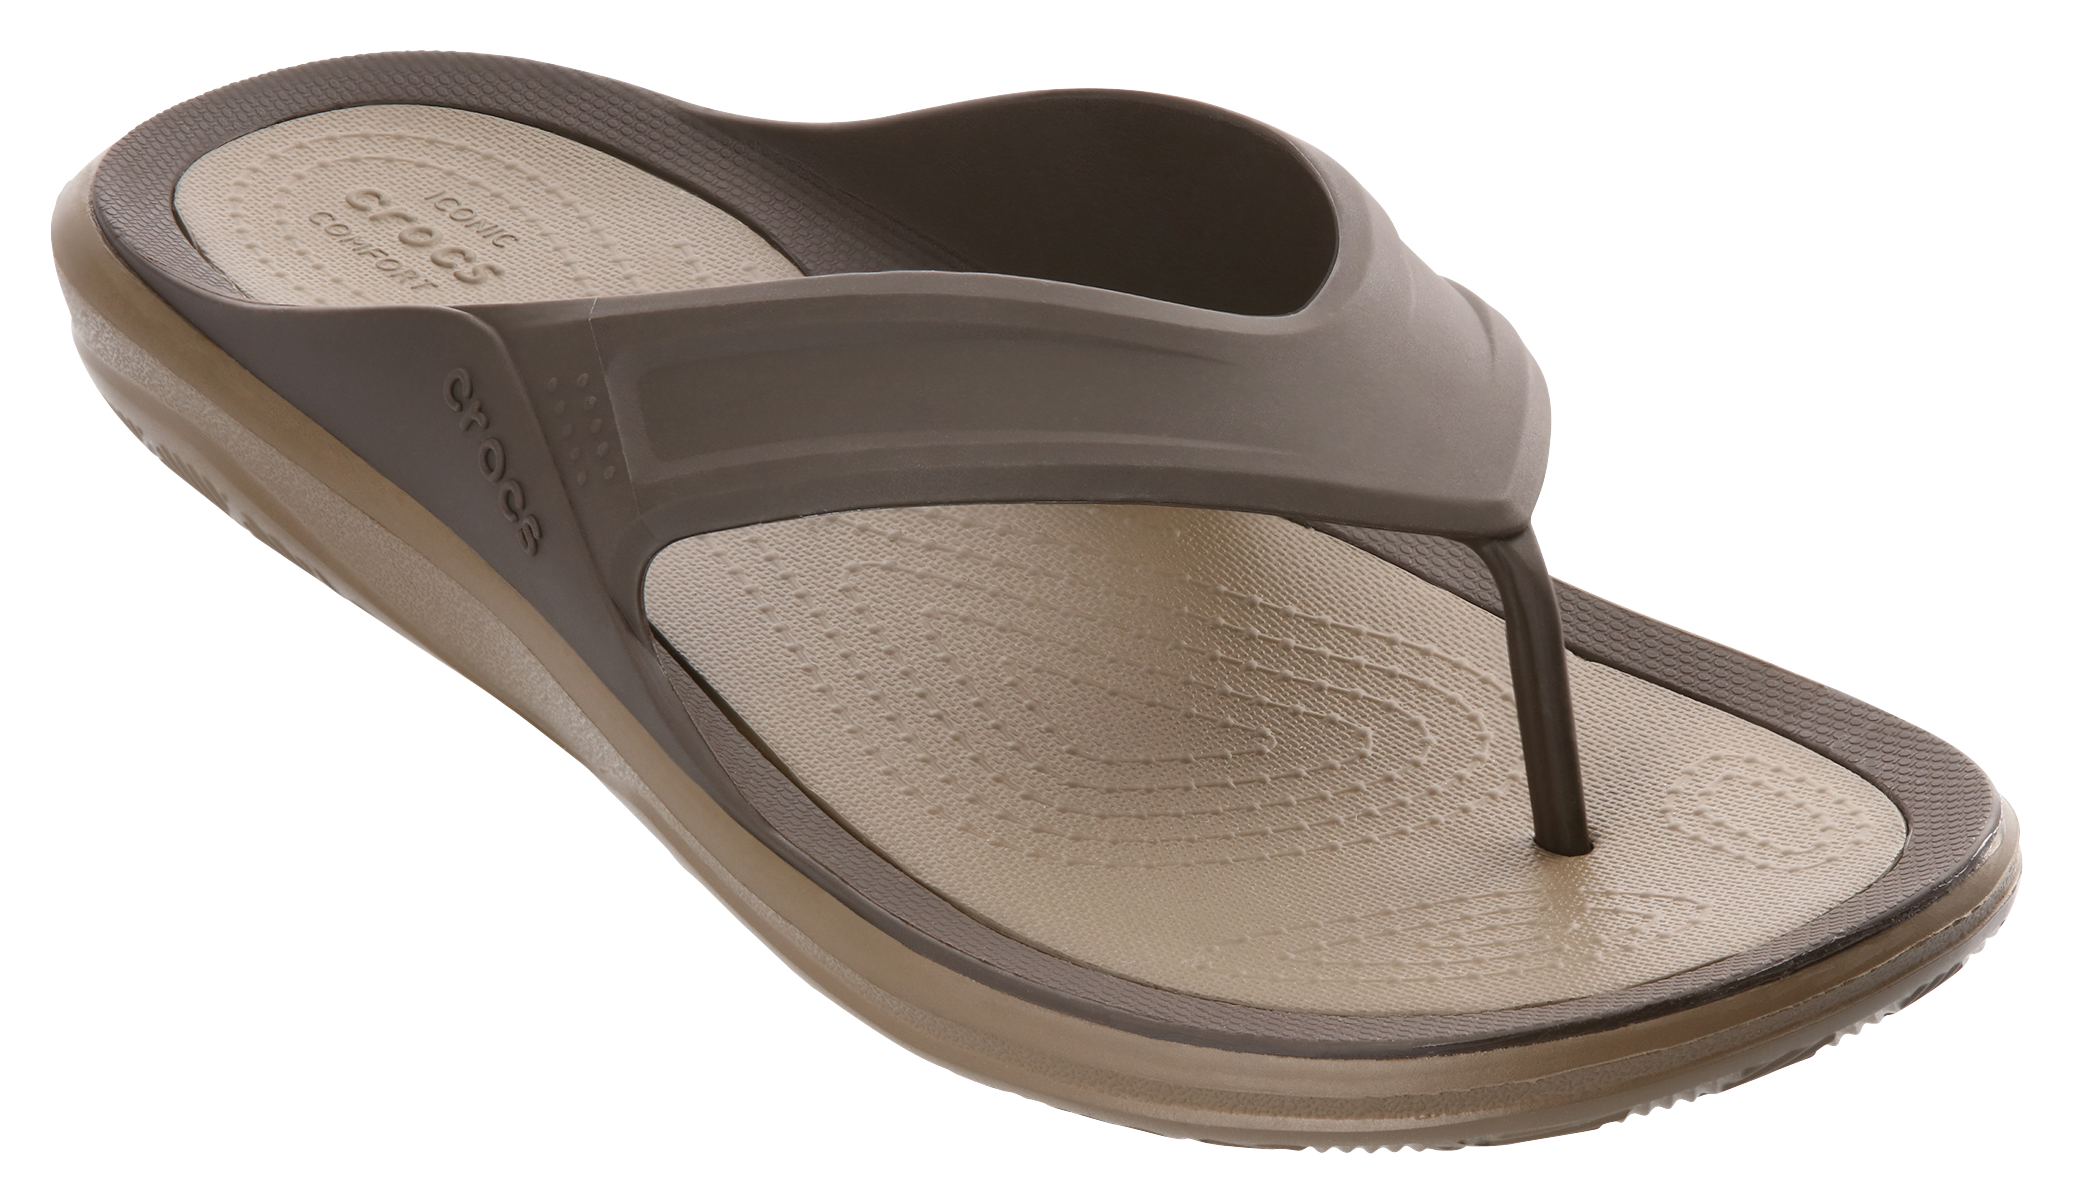 Crocs Swiftwater Wave Flip Thong Sandals for Men - Espresso/Walnut - 10M